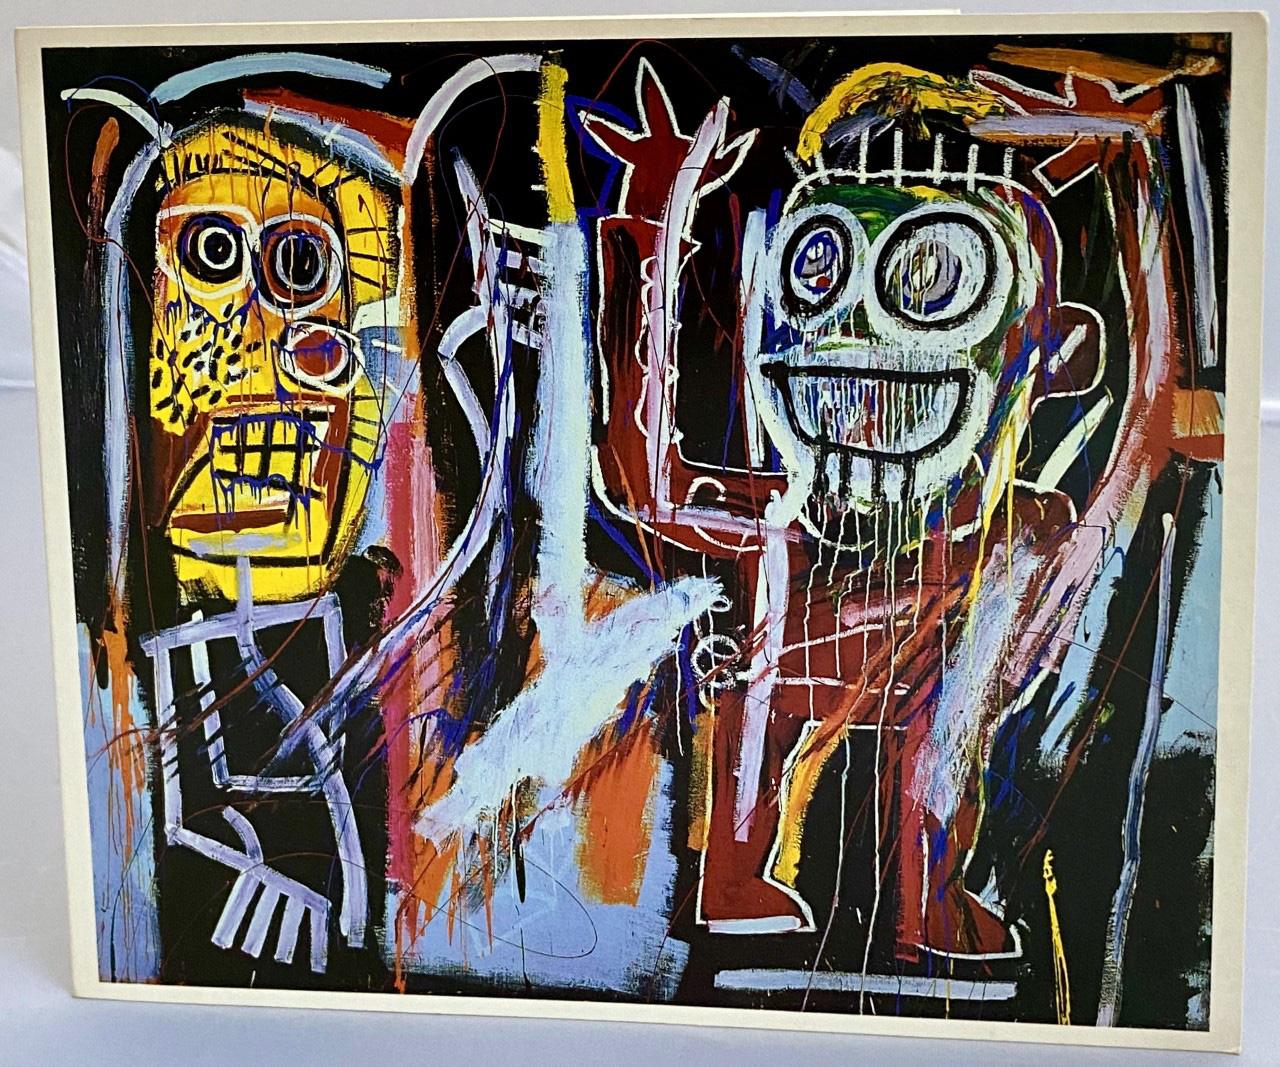 Basquiat at Tony Shafrazi gallery 1996 (Basquiat Dust Heads announcement)  - Print by after Jean-Michel Basquiat